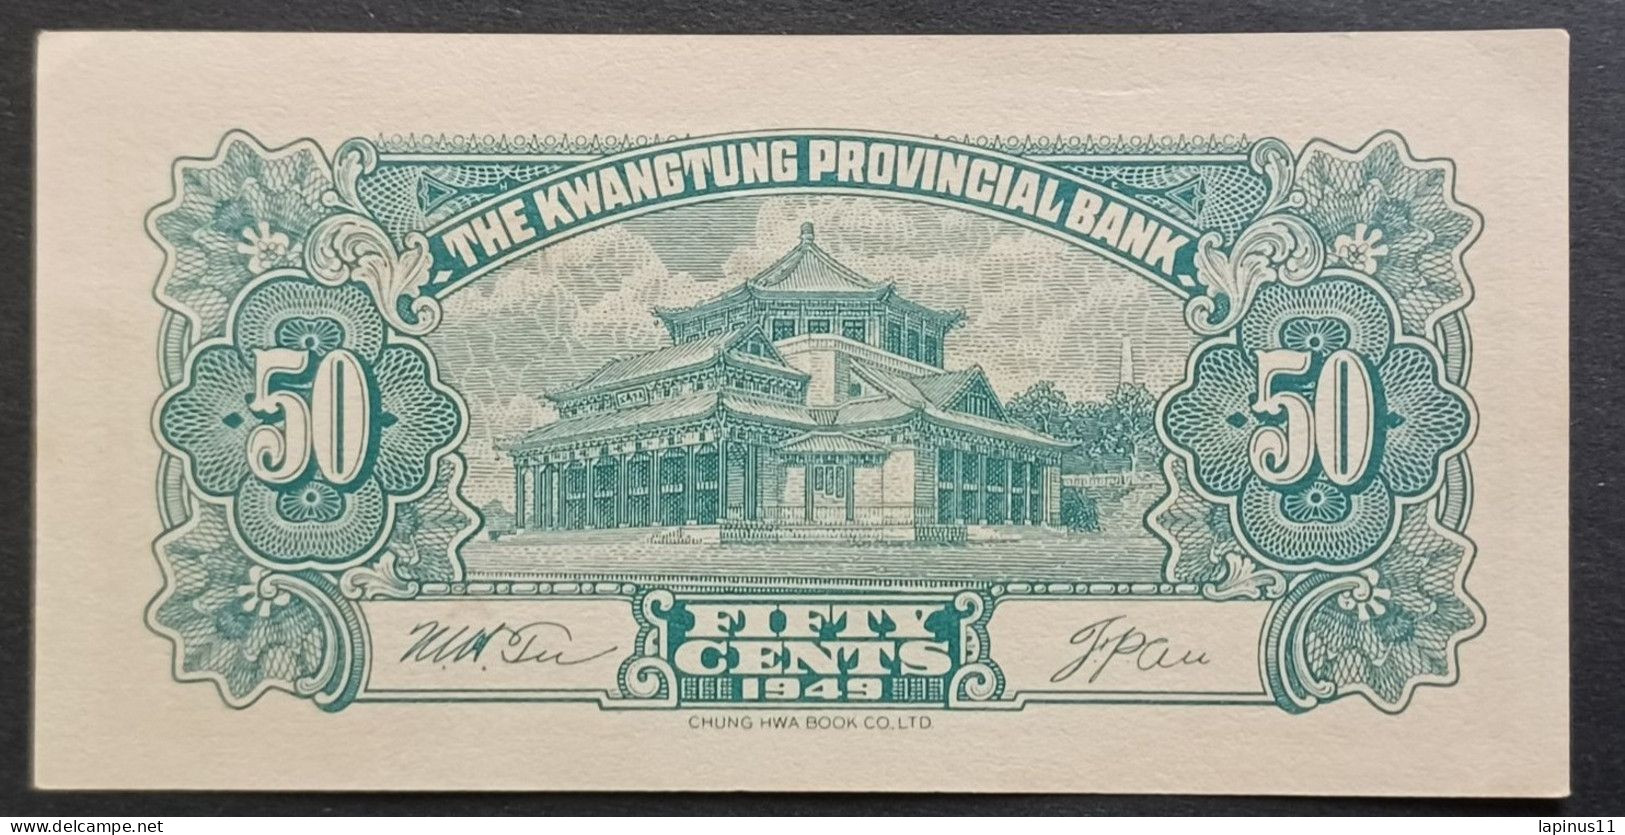 BANKNOTE CHINA KWANGTUNG PROVINCIAL 50 CENT 1949 SERIES A UNCIRCULATED - Cina